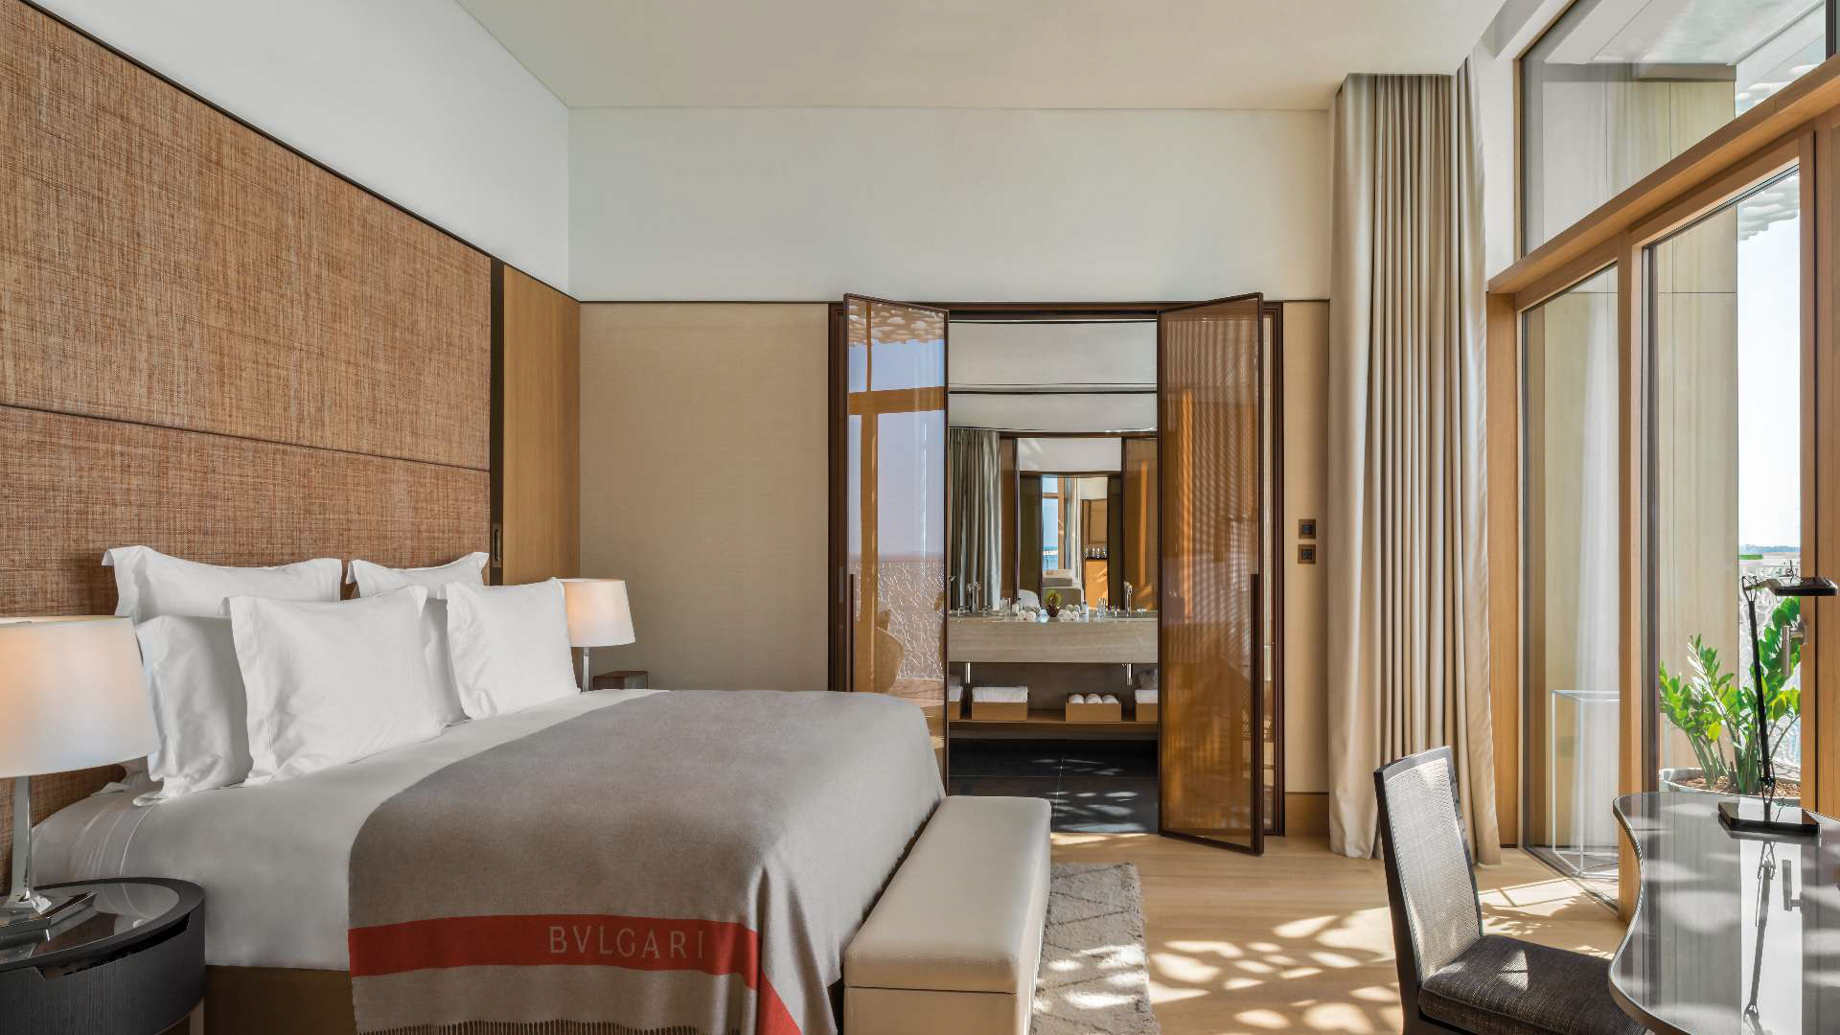 Bvlgari Resort Dubai – Jumeira Bay Island, Dubai, UAE – Guest Suite Bedroom